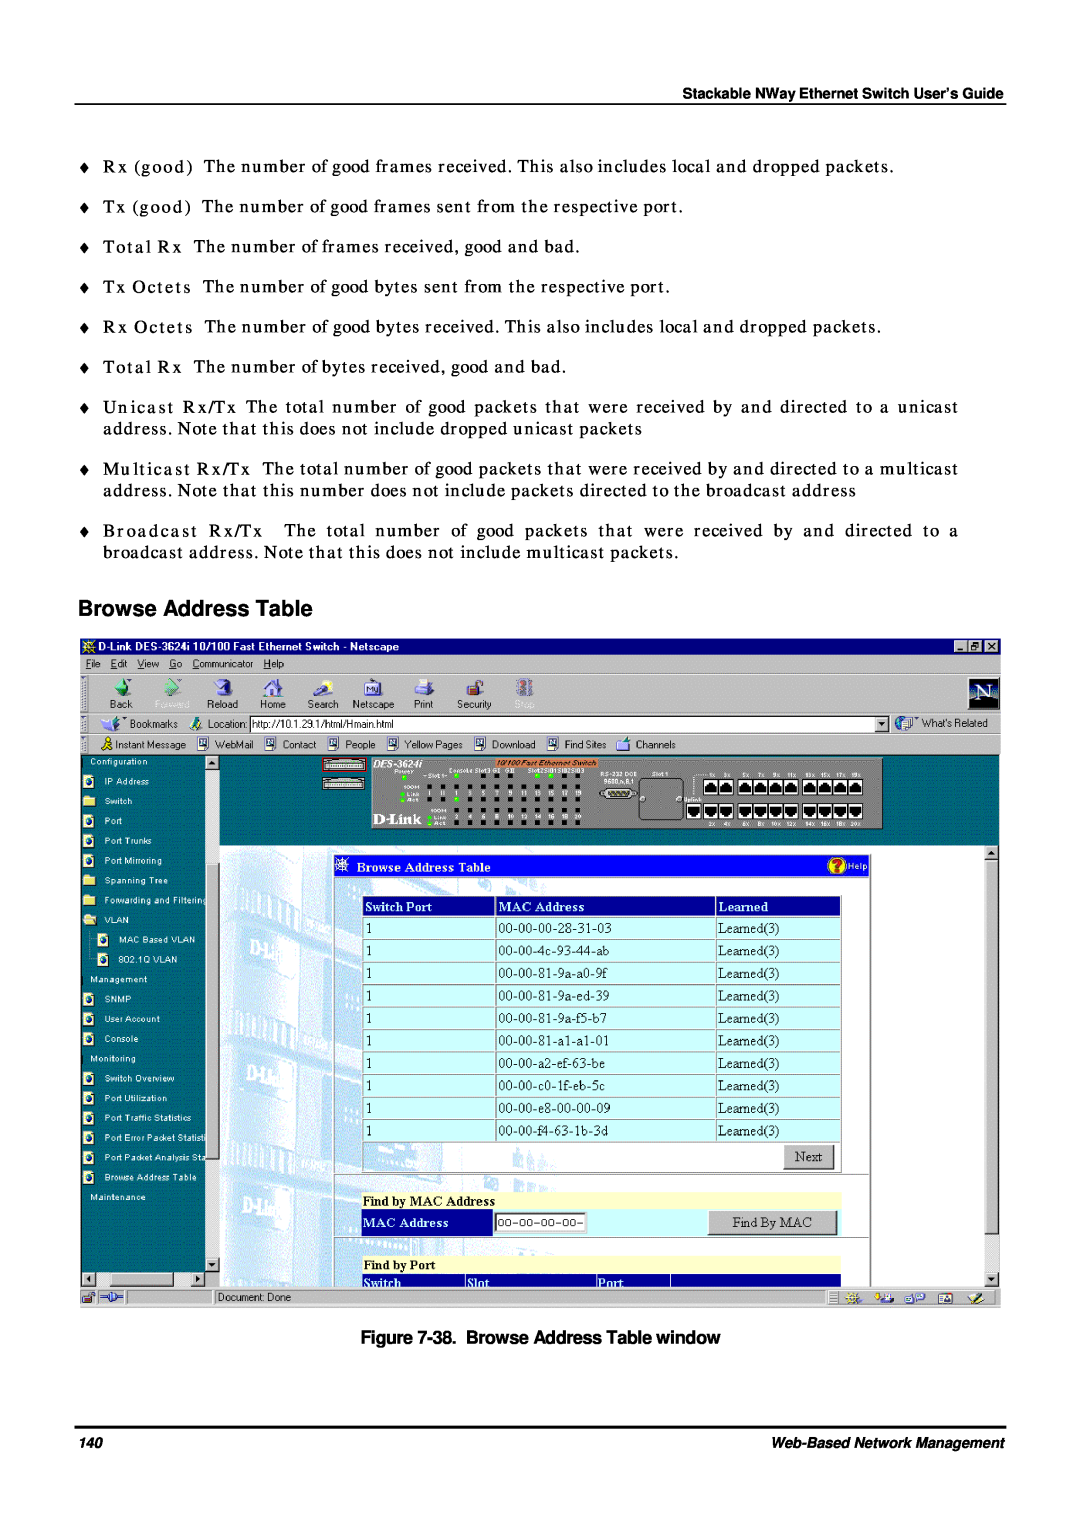 D-Link DES-3624 manual 38. Browse Address Table window 